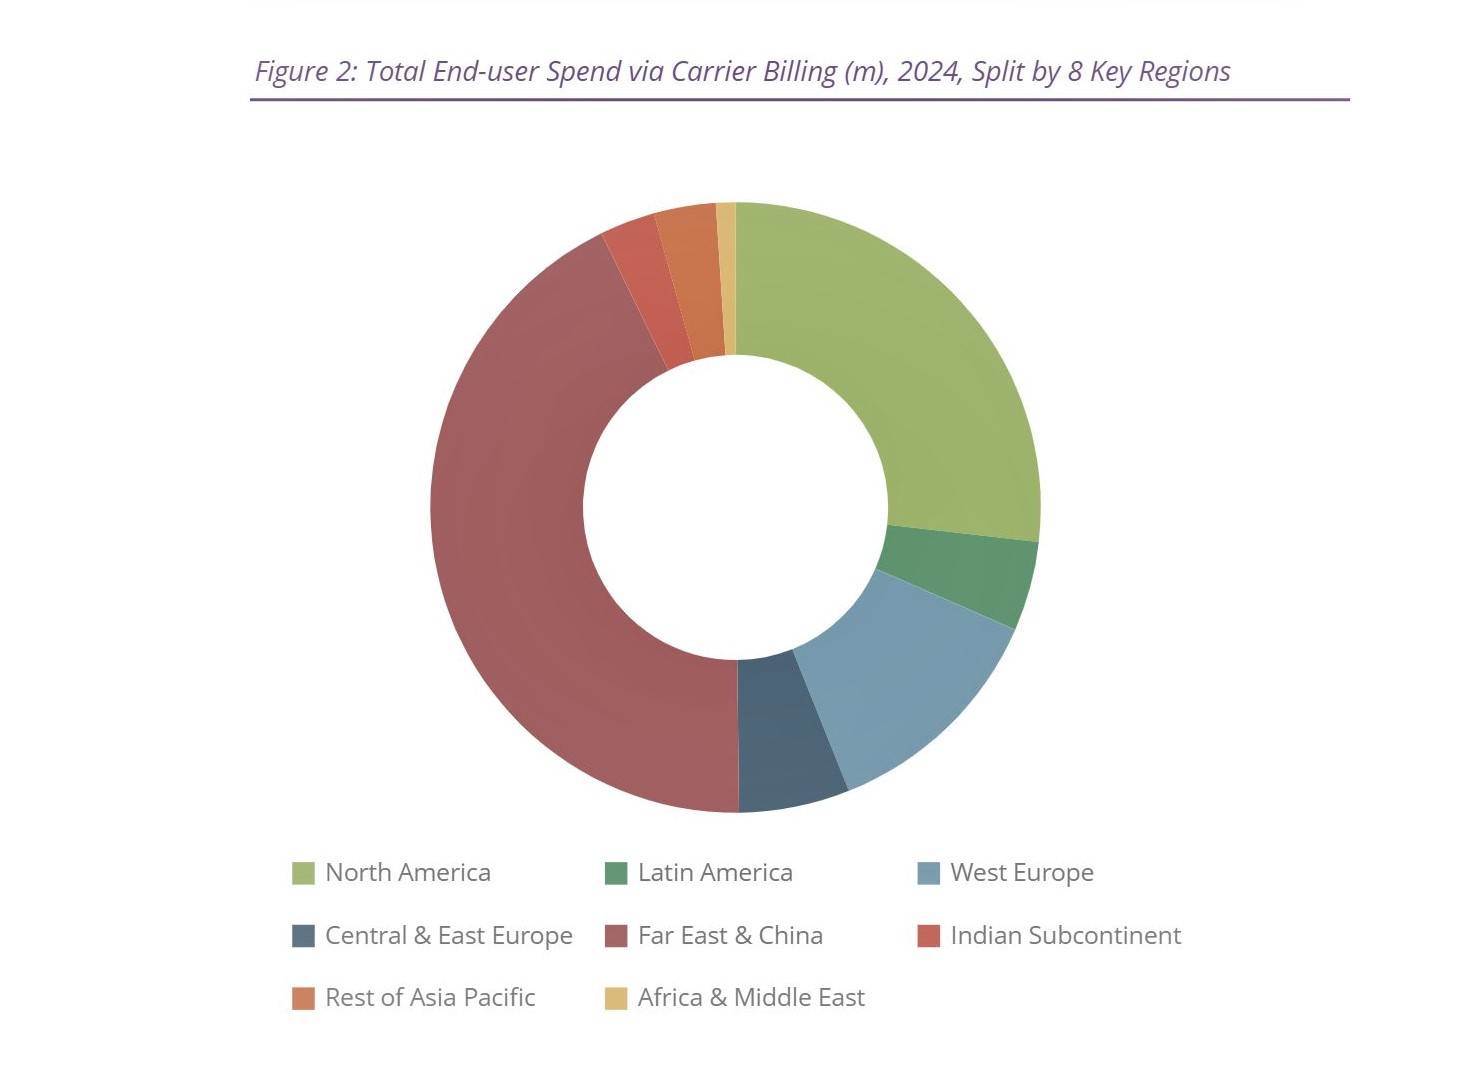 Total end-user spend via carrier billing in 2024, split by eight key regions
Source: Juniper Research